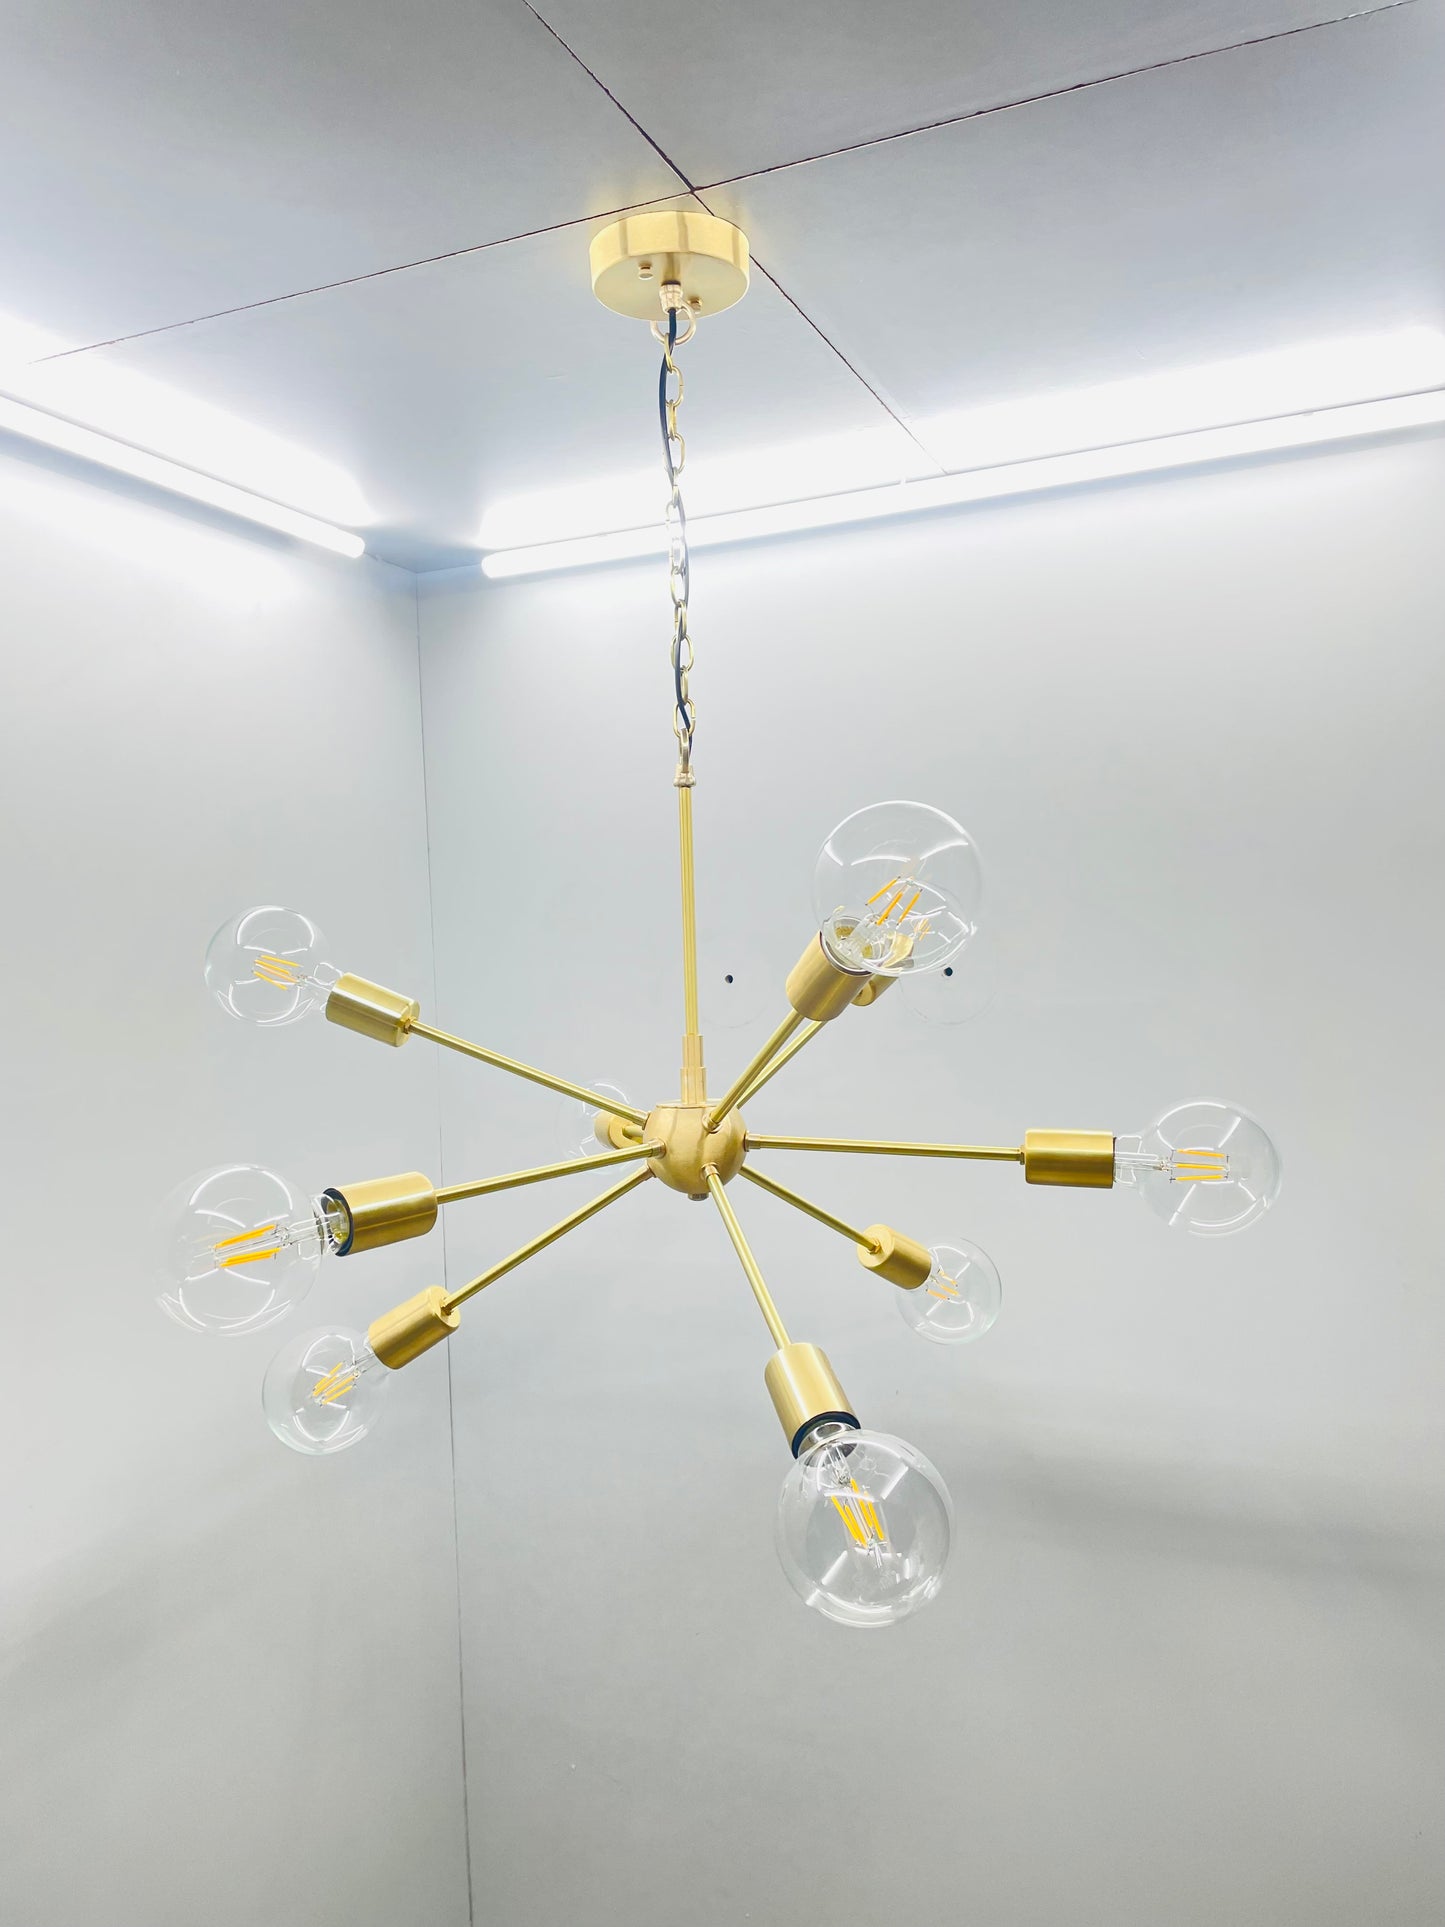 Mid Century Stilnovo Brass Sputnik Chandelier Handmade Brass Ceiling Lamp Light 9 Arms/Lights - Global Lights Hub